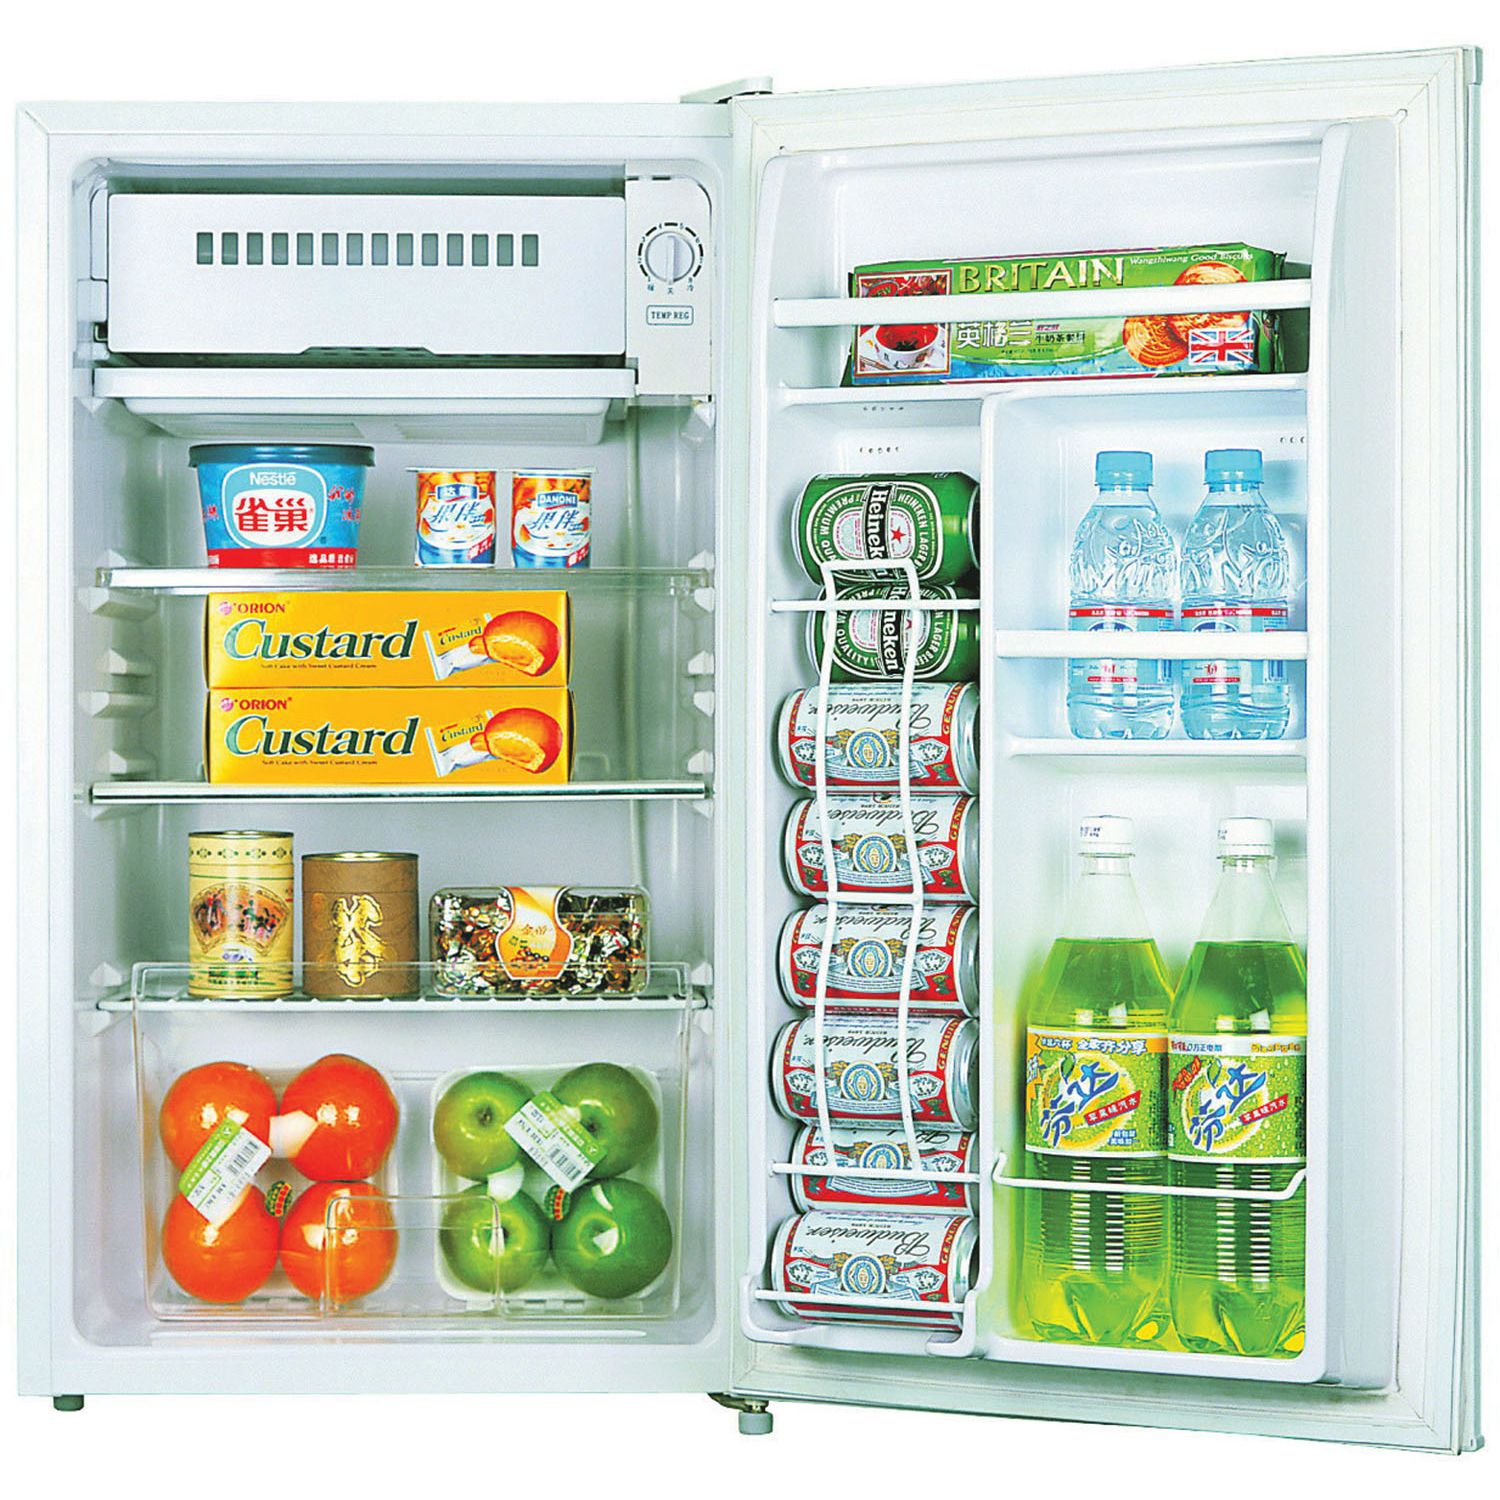 Kenmore 3.3 cu. ft. Compact Refrigerator